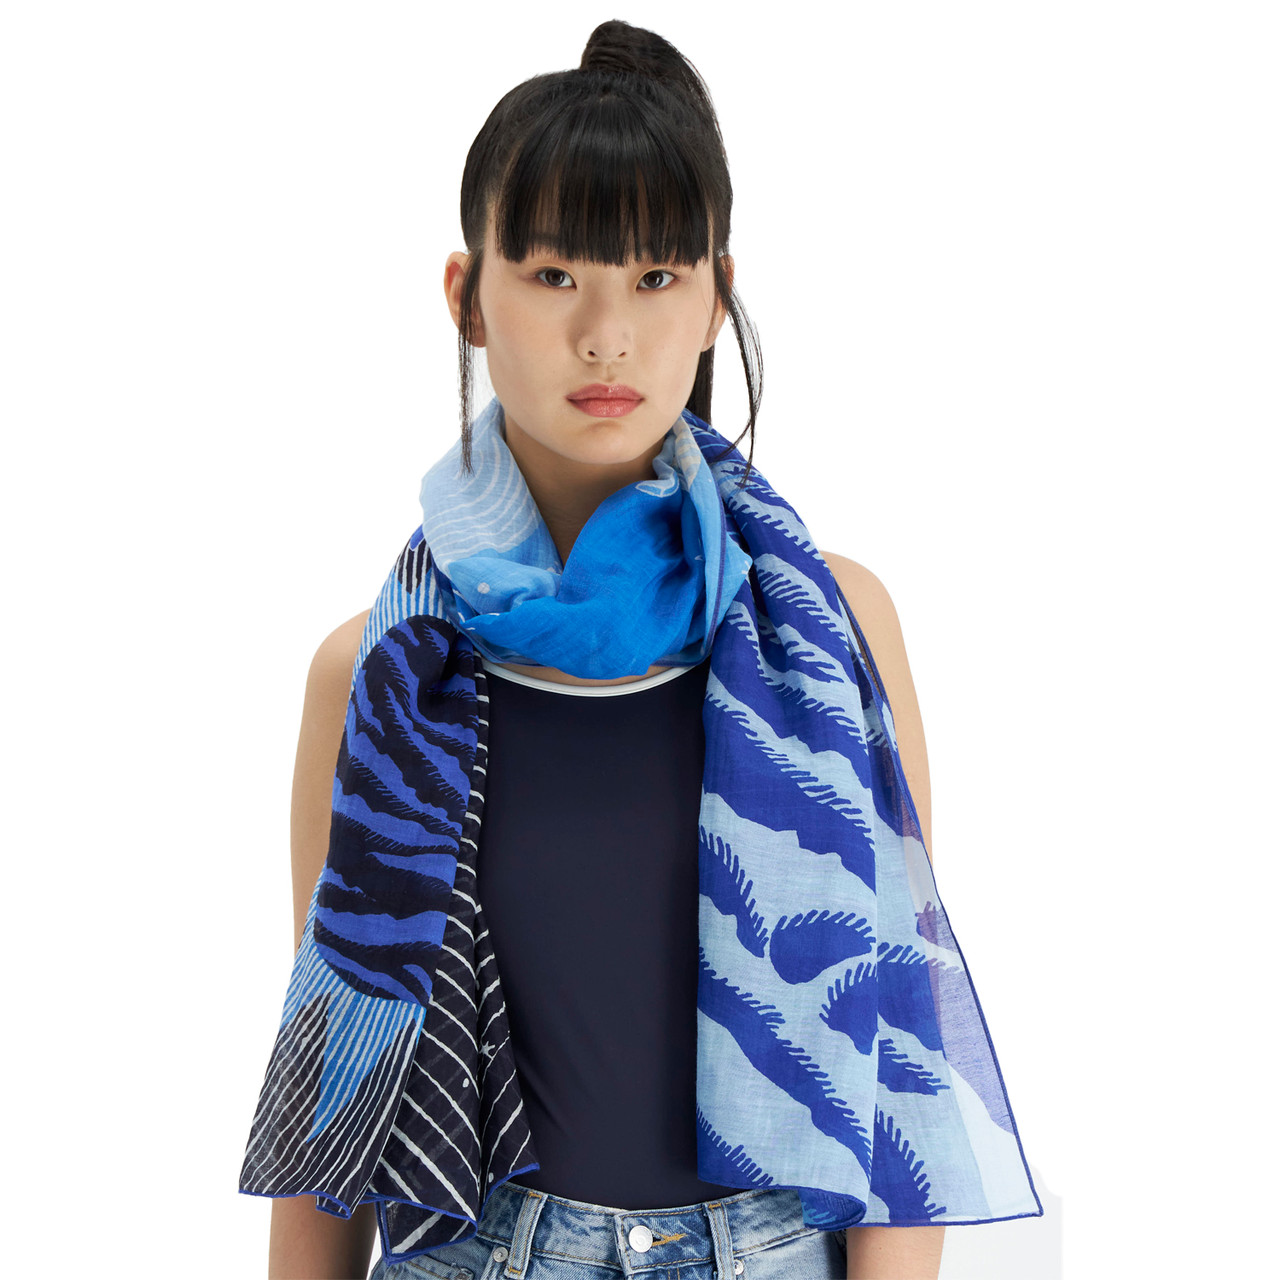 Boom Silk & Cotton Scarf in Blue, Inoui Editions, tomfoolery